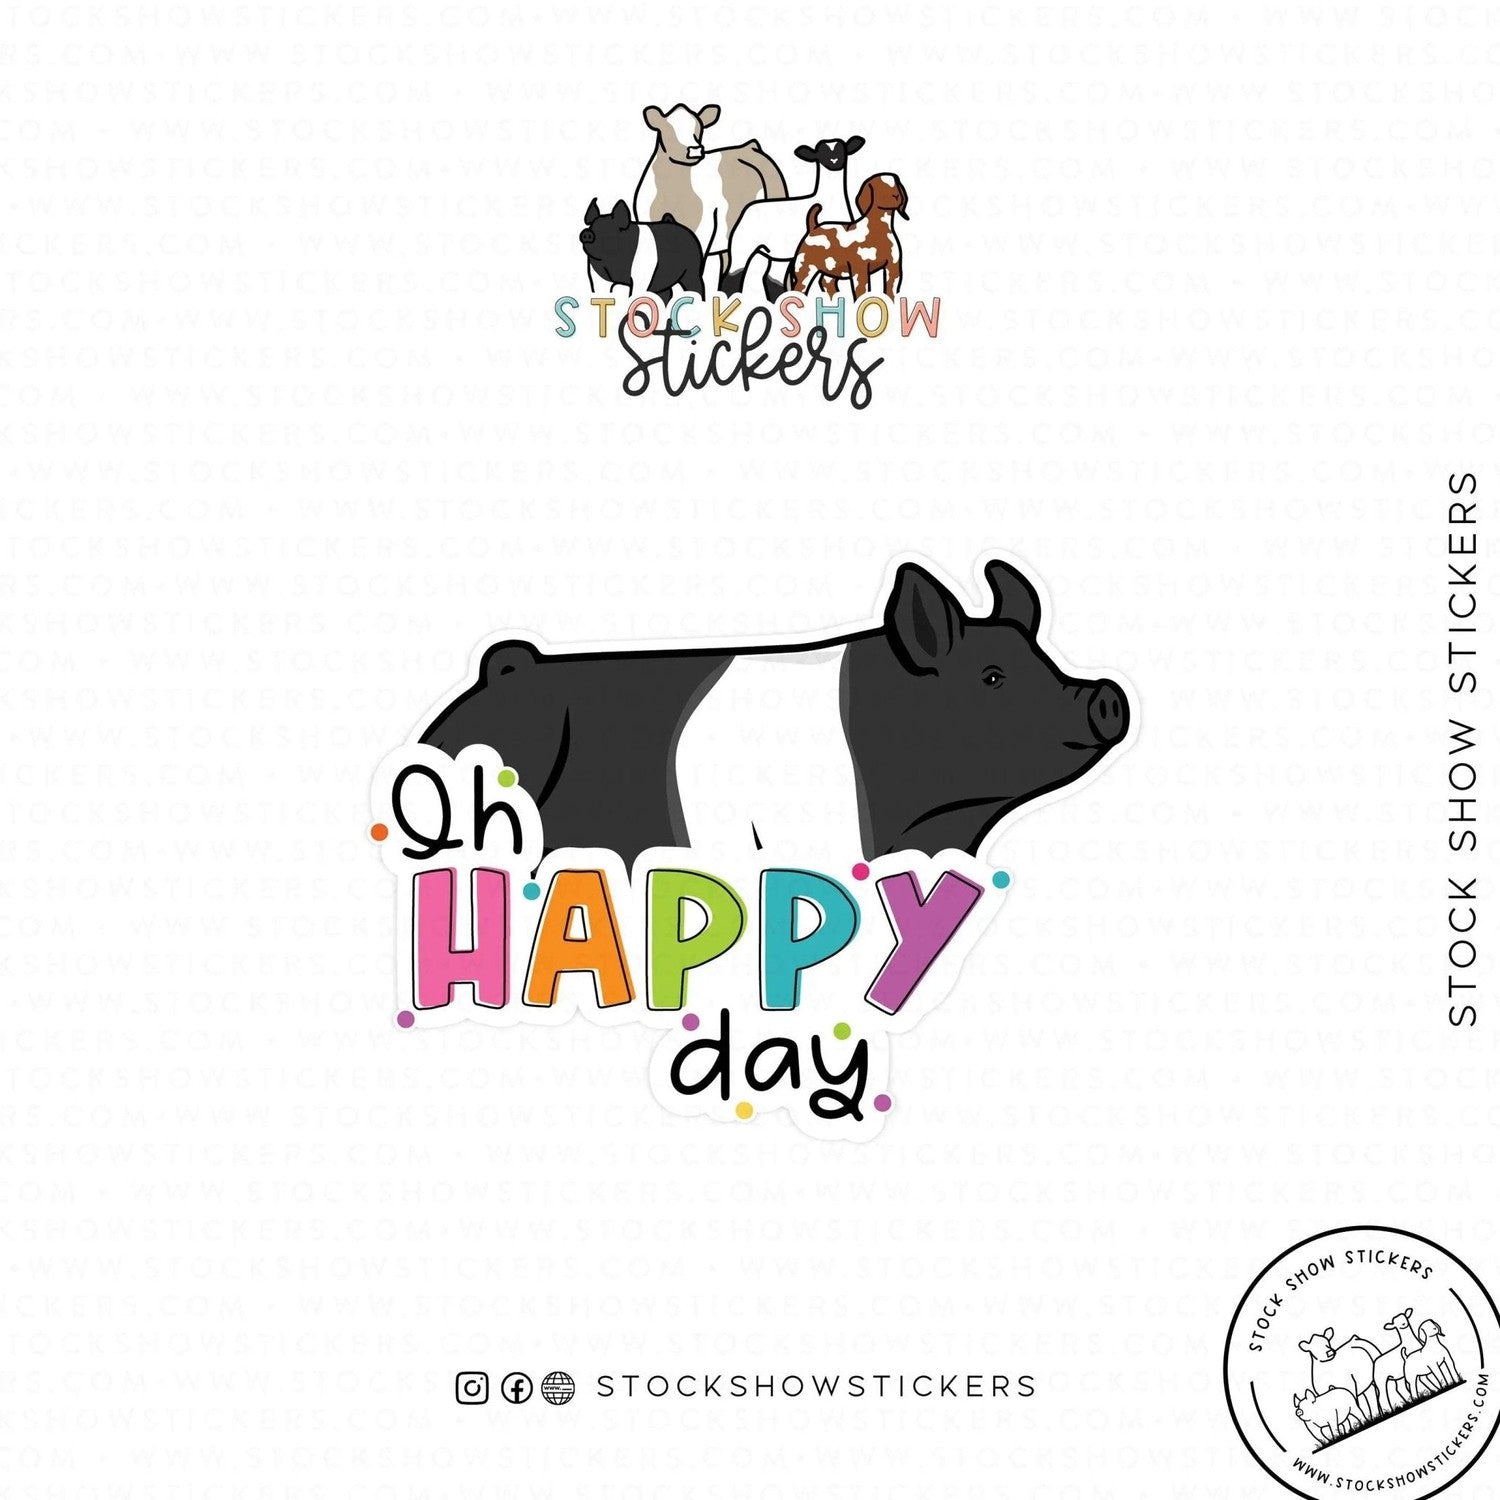 Custom Made Oh Happy Day Livestock Stickers Stock Show Livestock - Livestock &amp; Co. Boutique